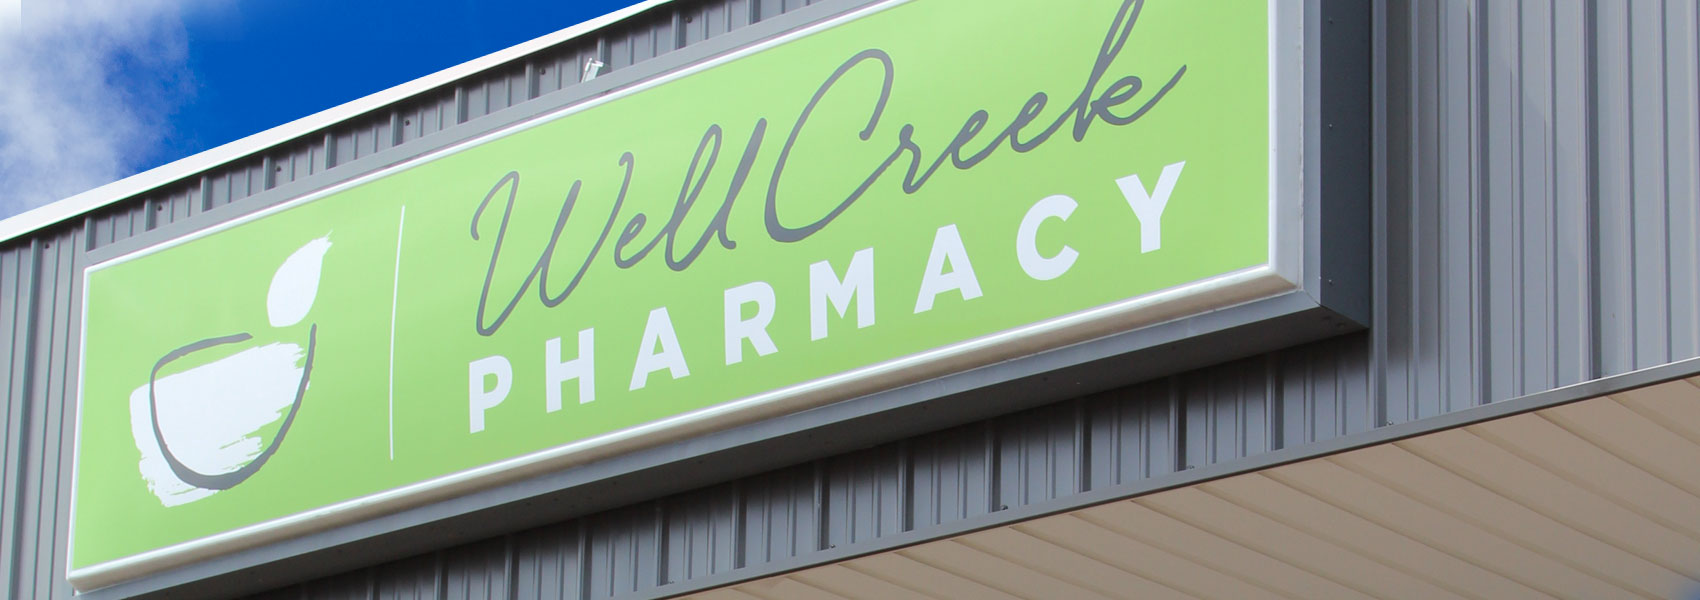 well creek pharmacy signage